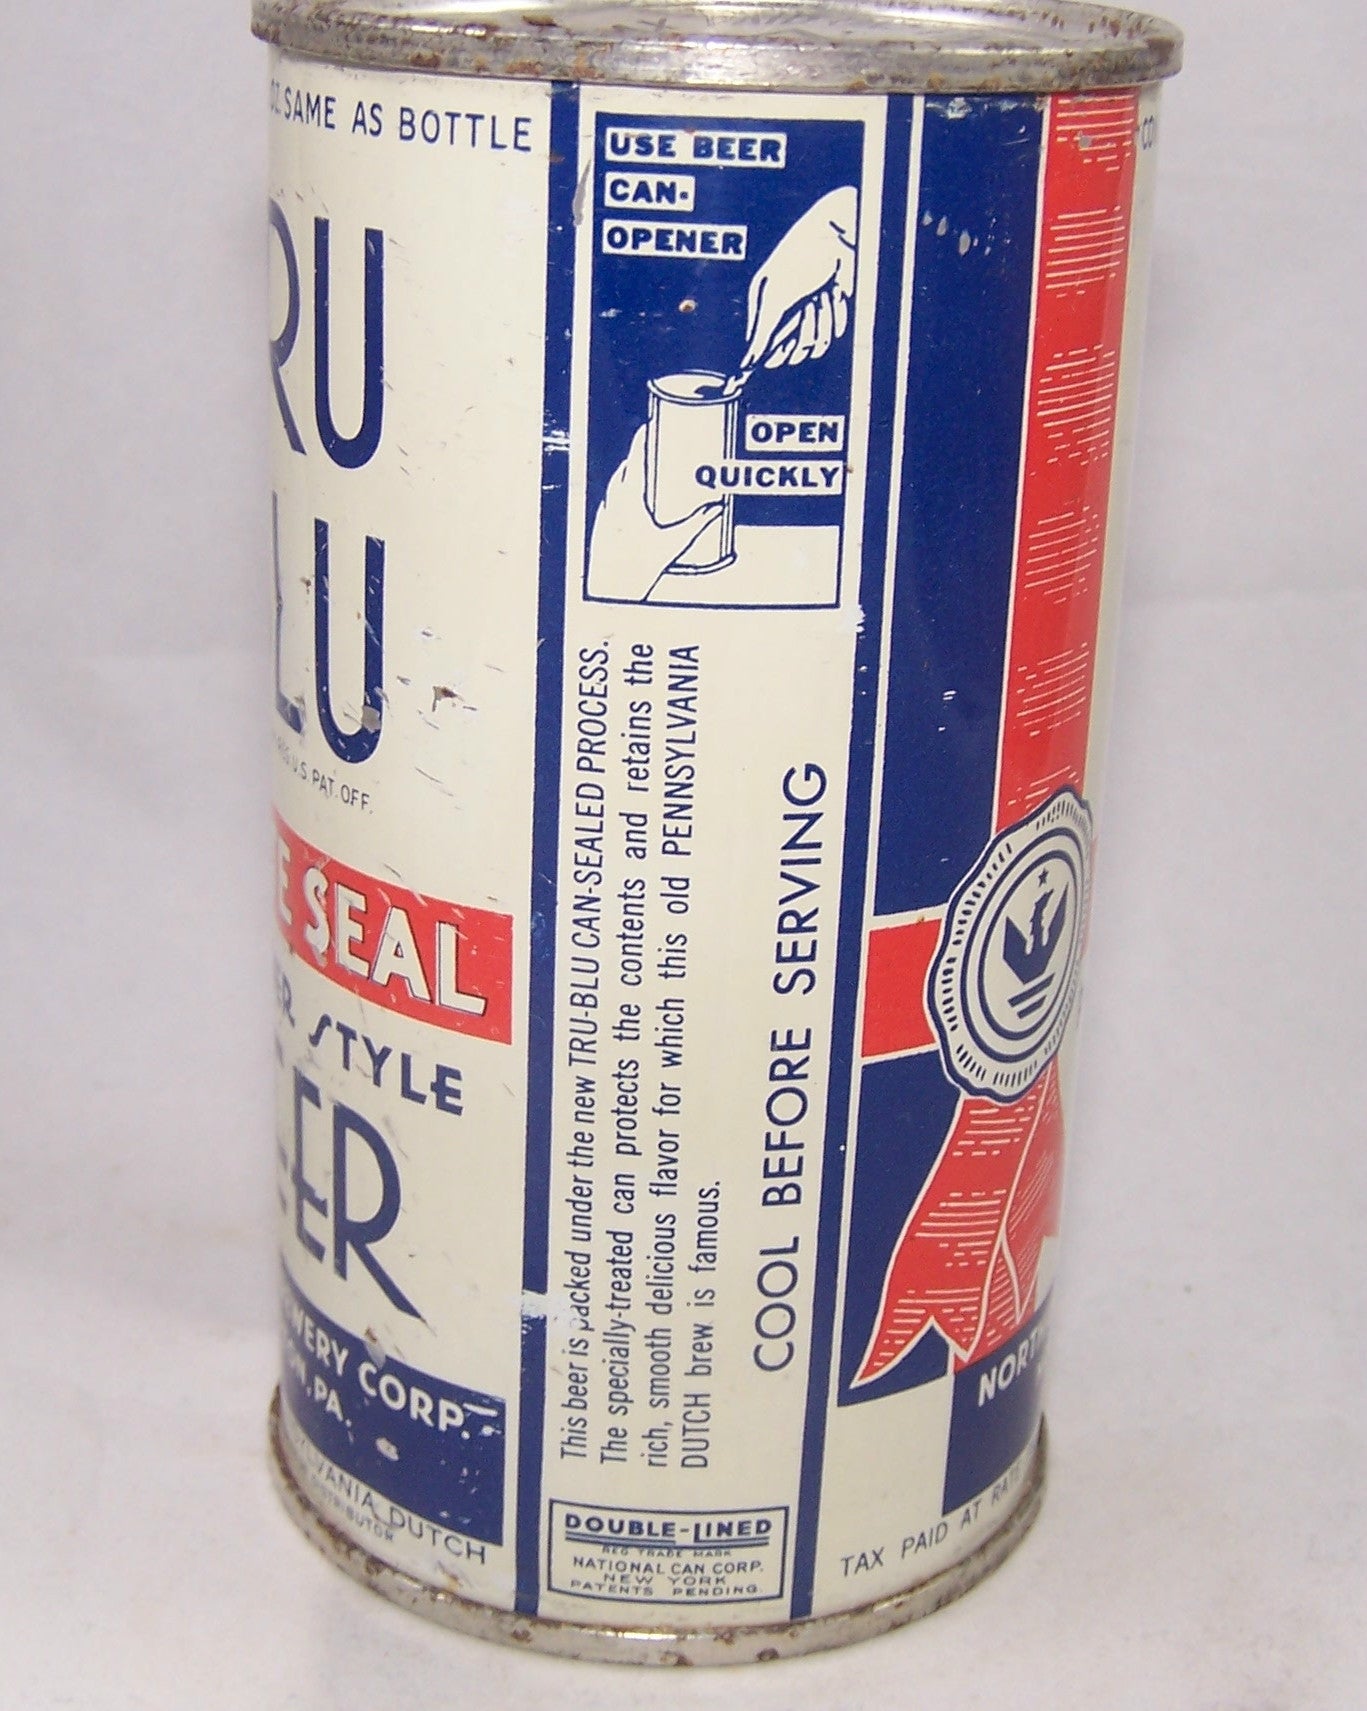 Tru Blu White Seal Beer (White can) Lilek # 812, Grade 1- Sold